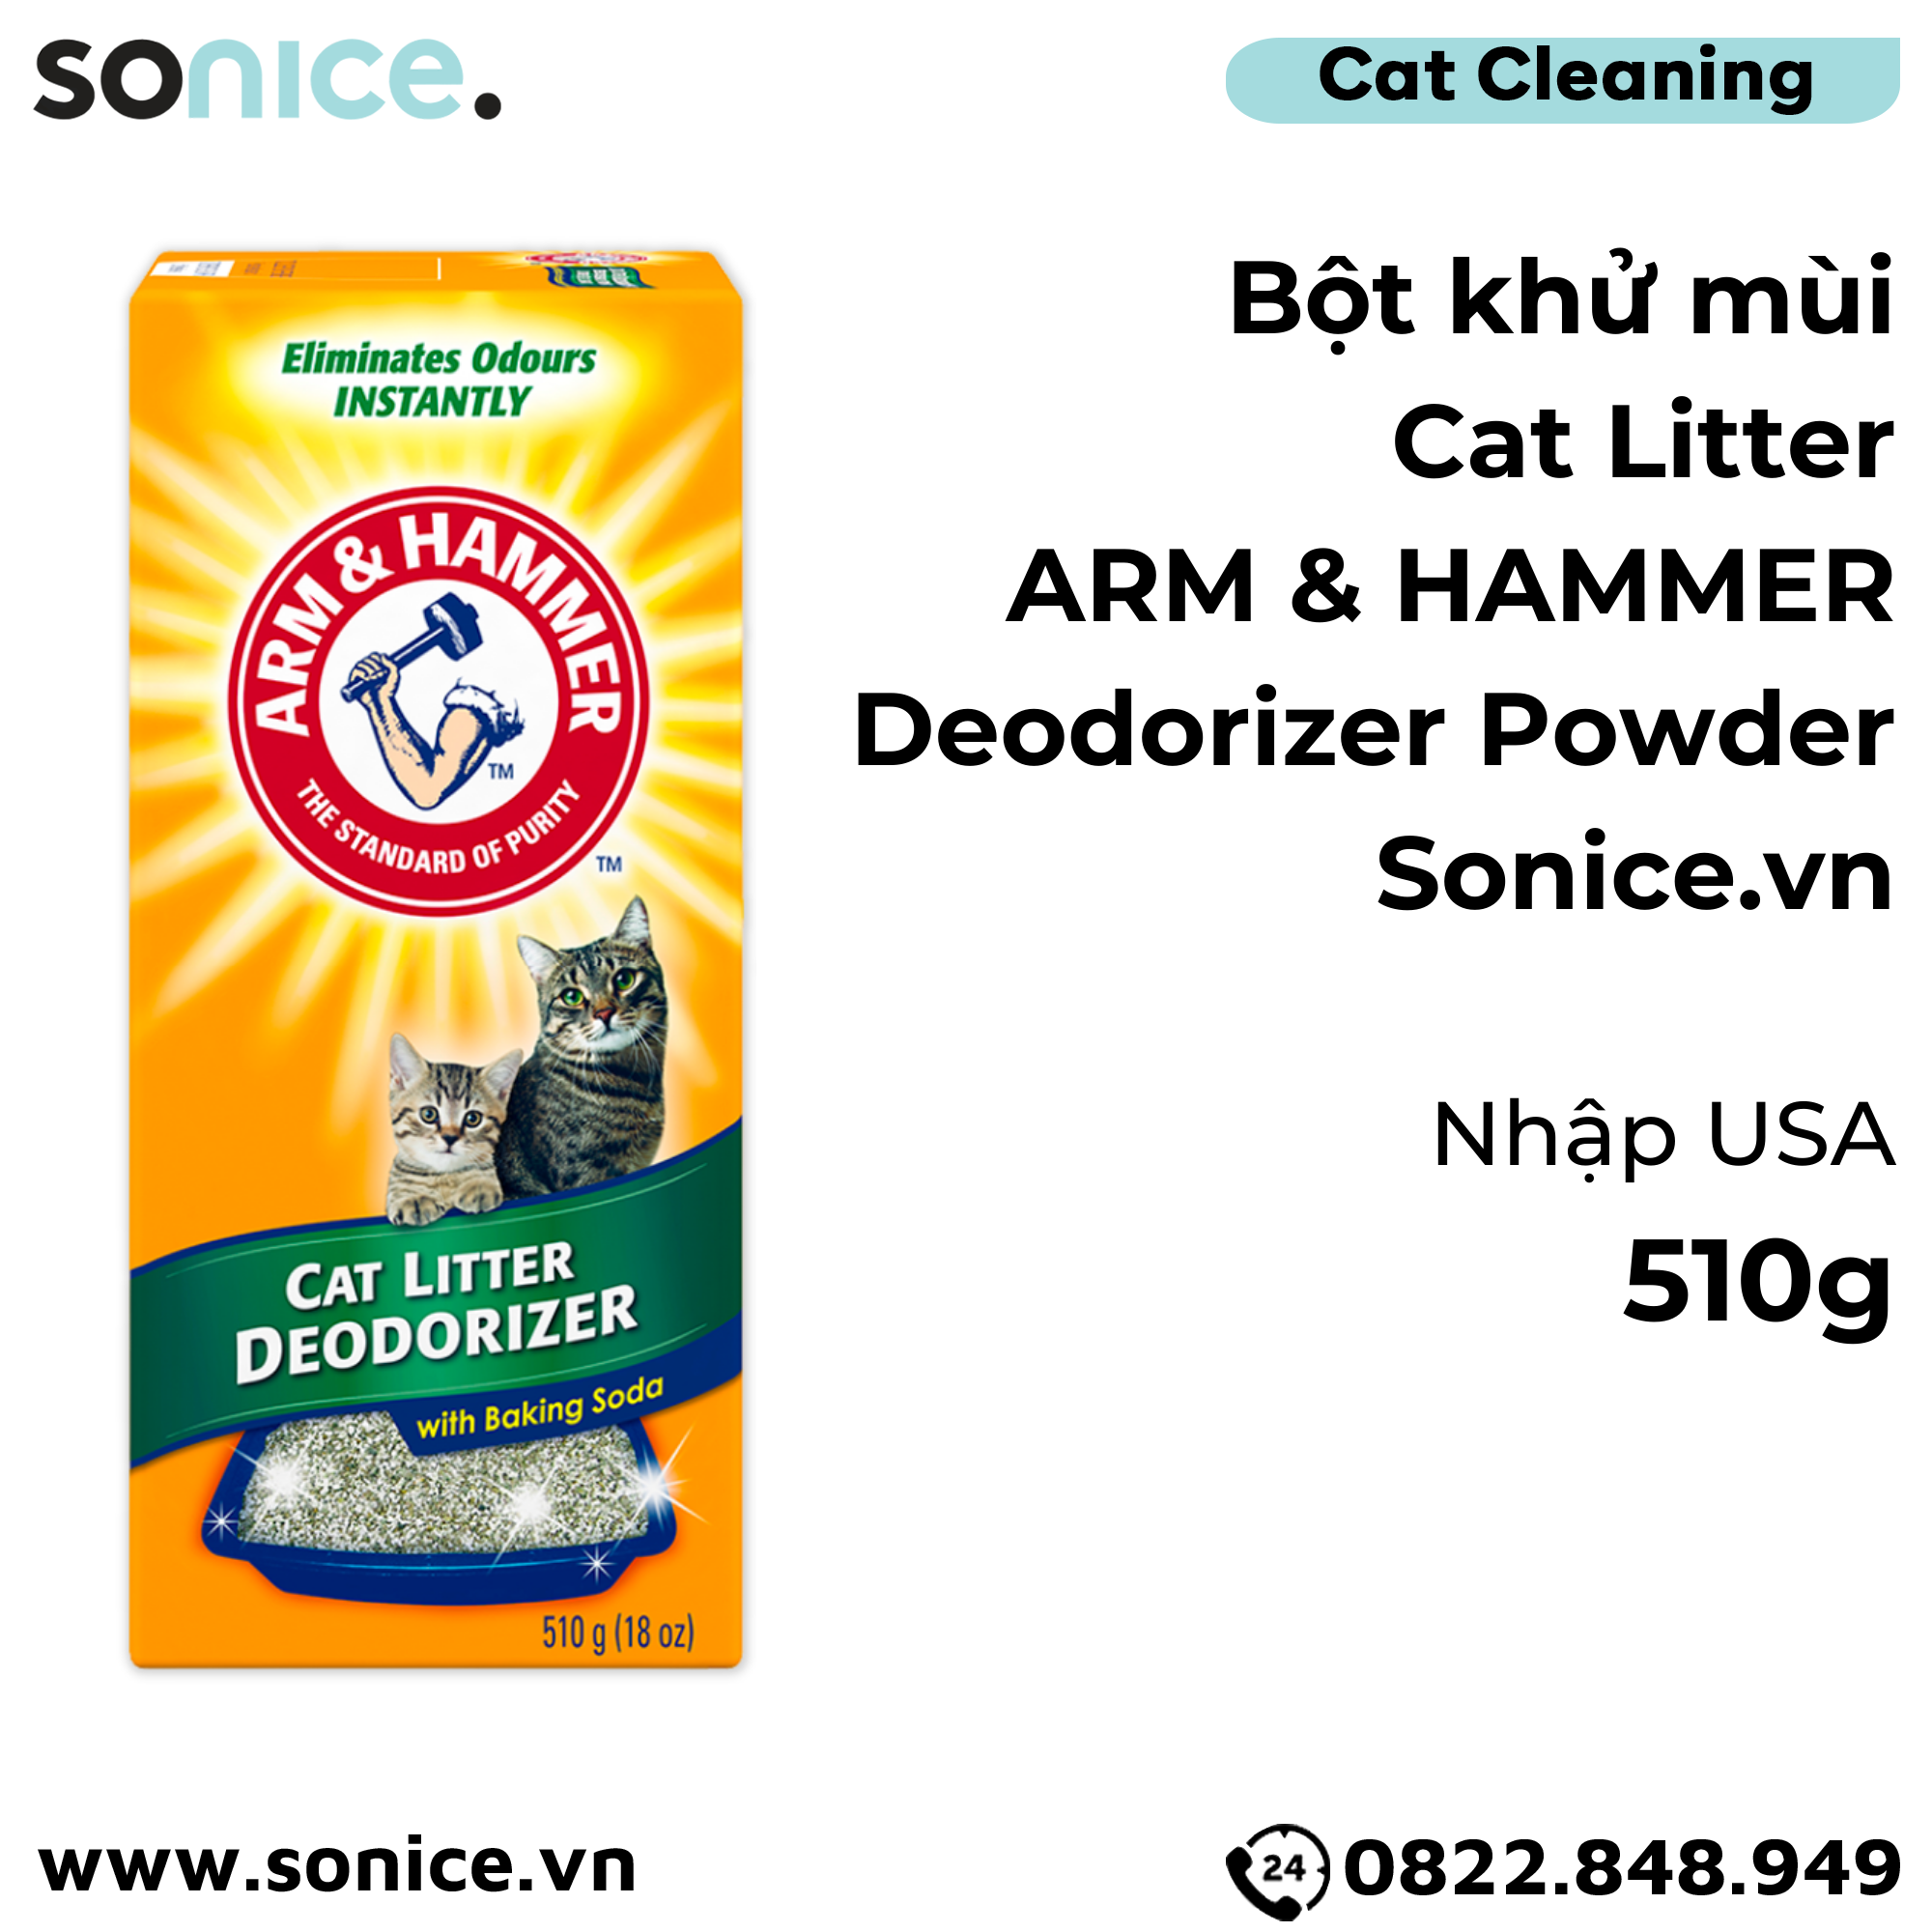  Bột khử mùi Cat Litter ARM & HAMMER Deodorizer Powder 510g - Nhập USA SONICE. 